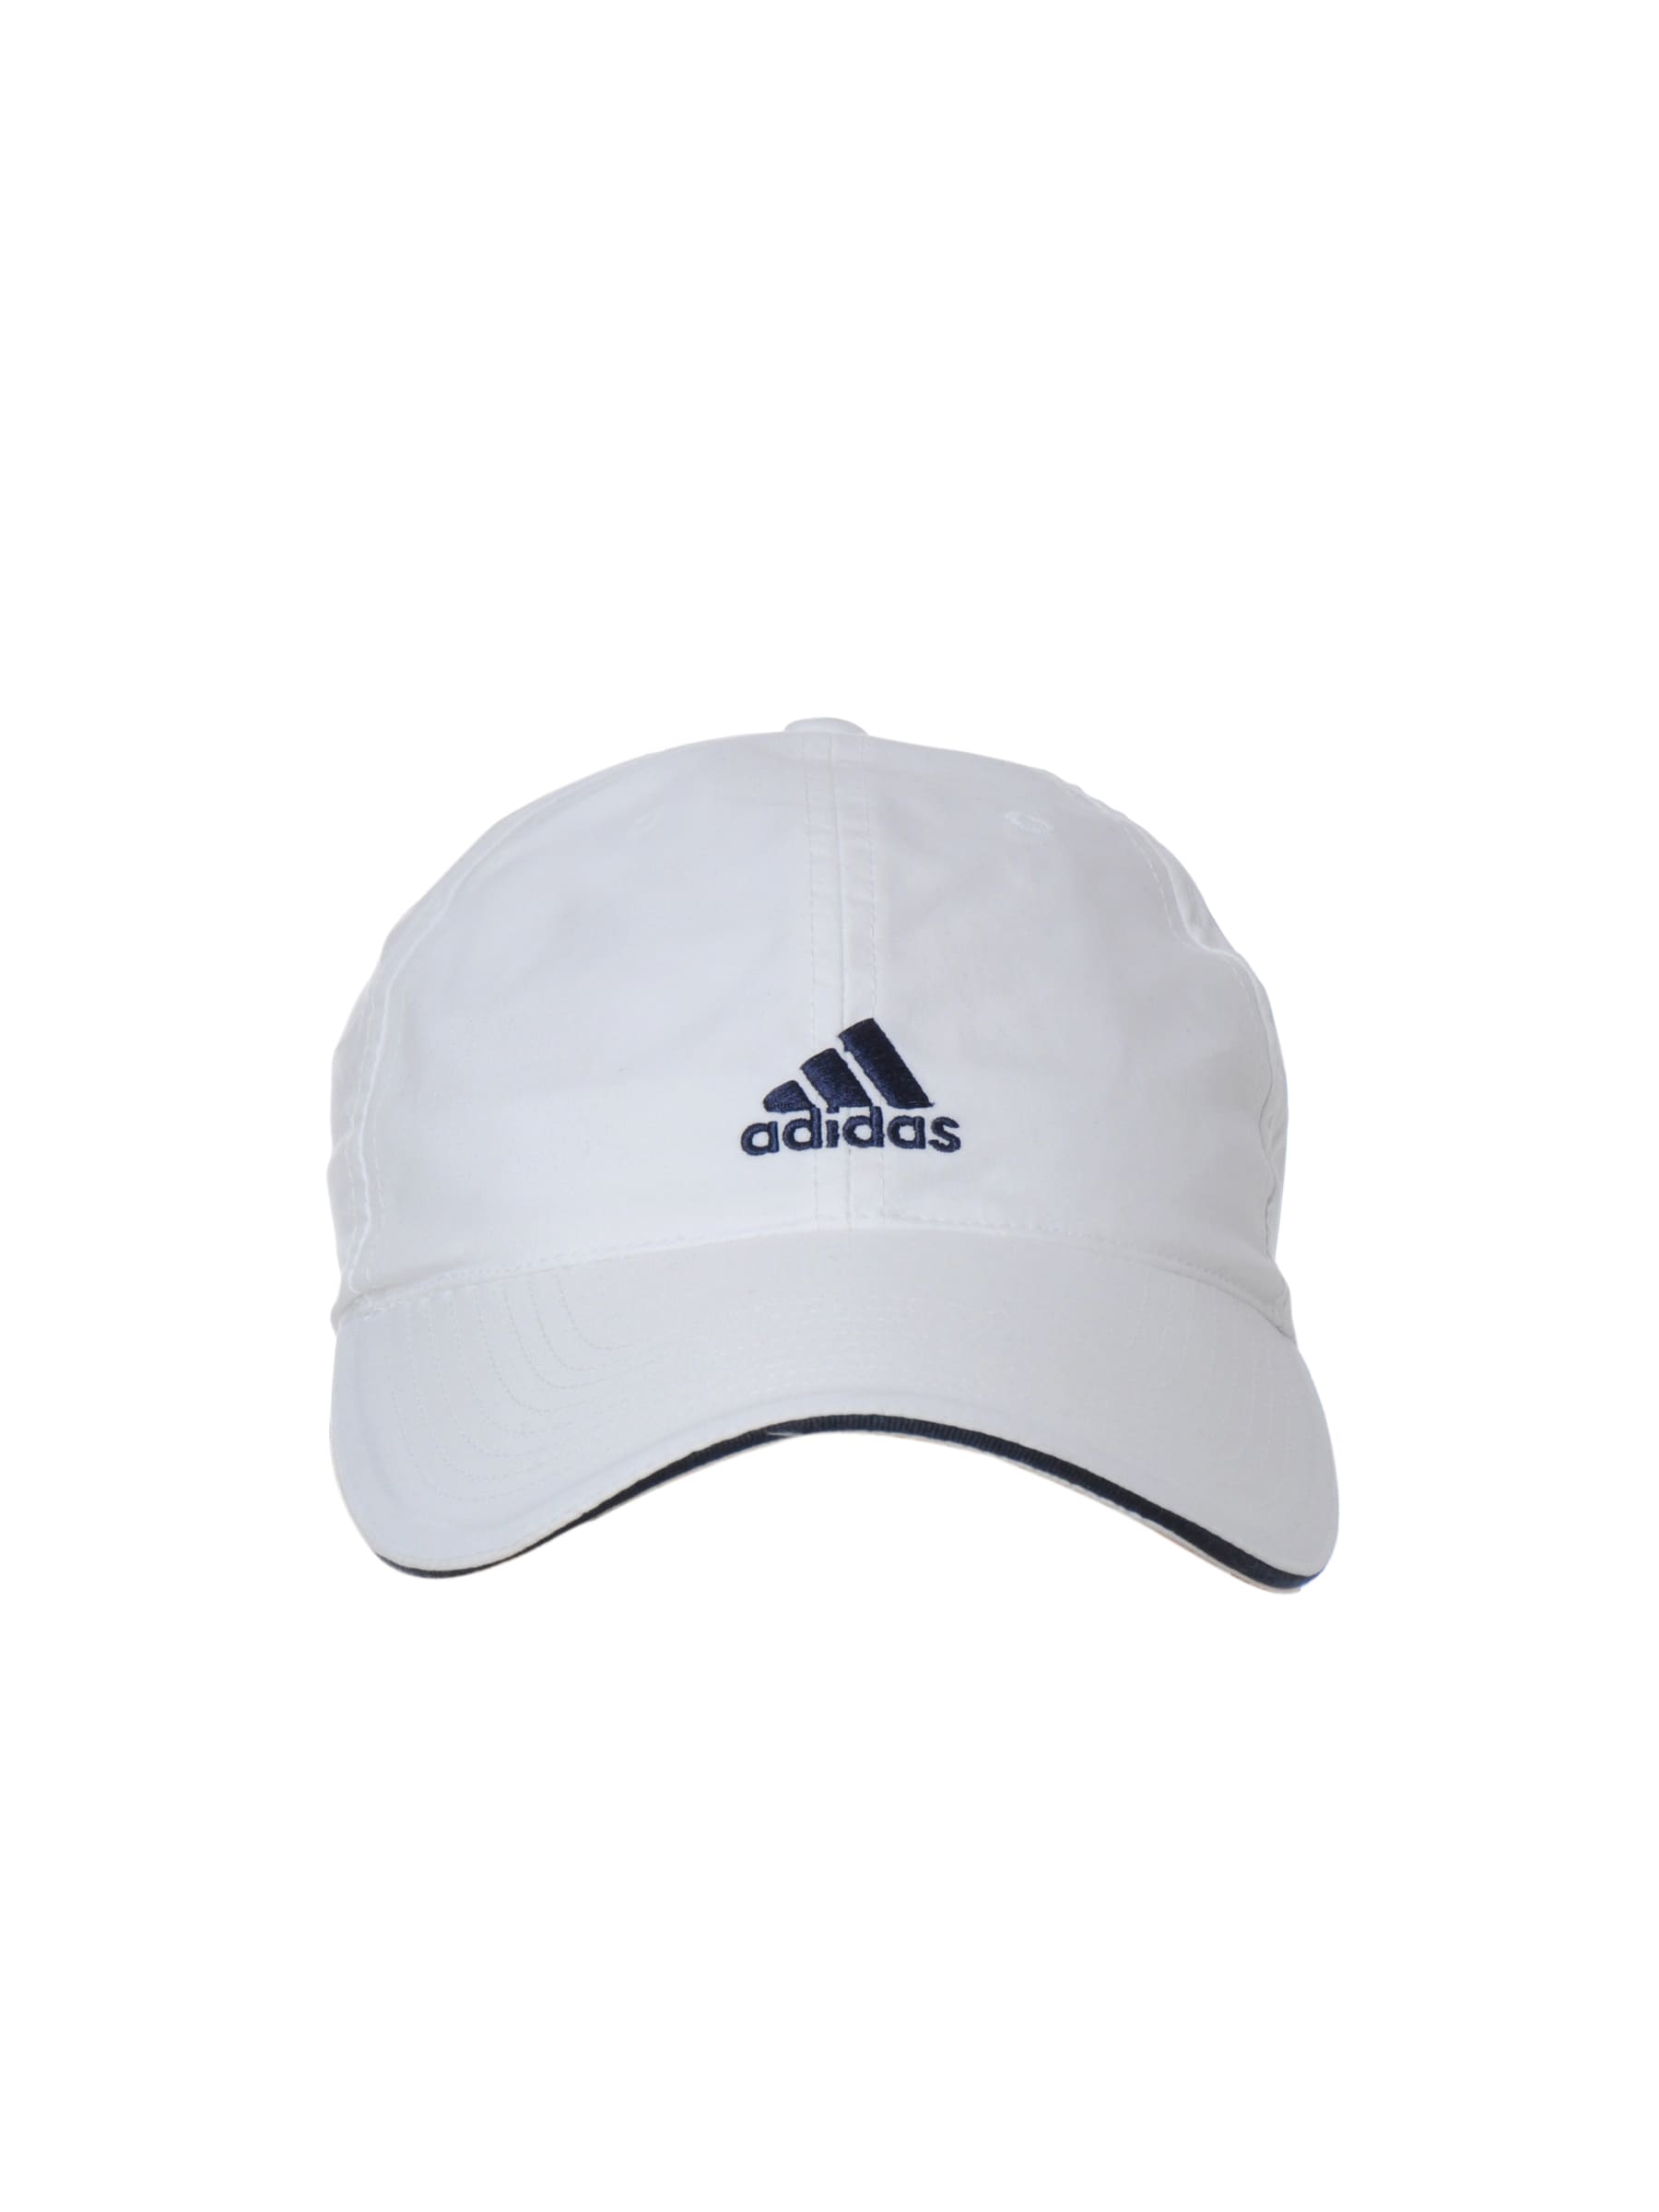 ADIDAS Unisex Sports White Caps